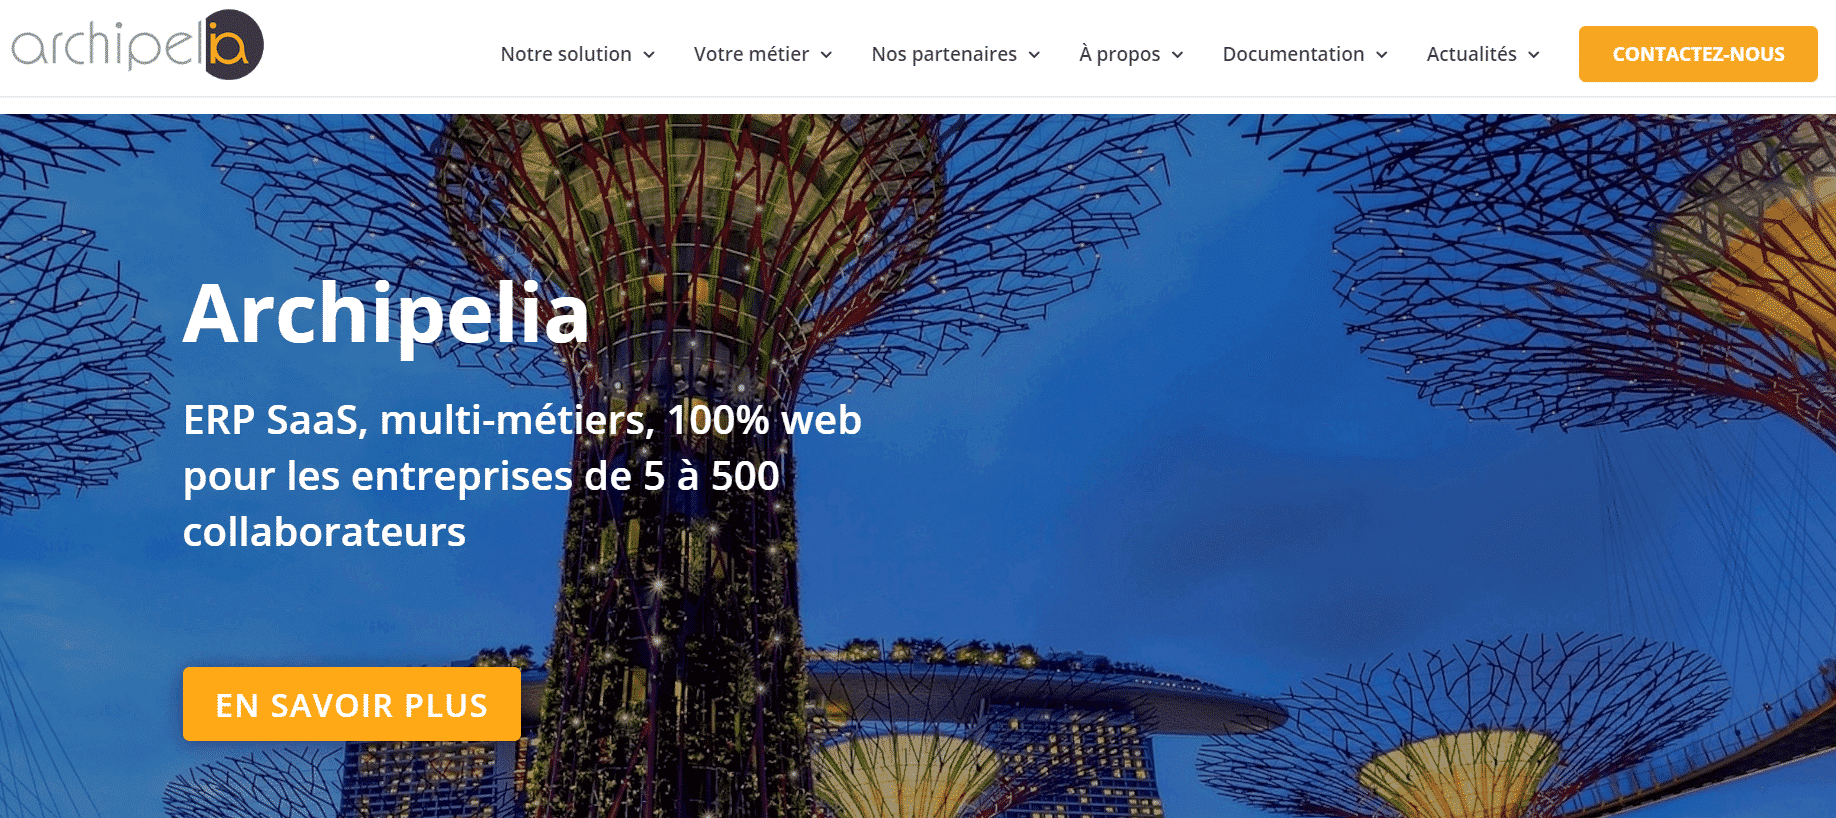 archipelia homepage